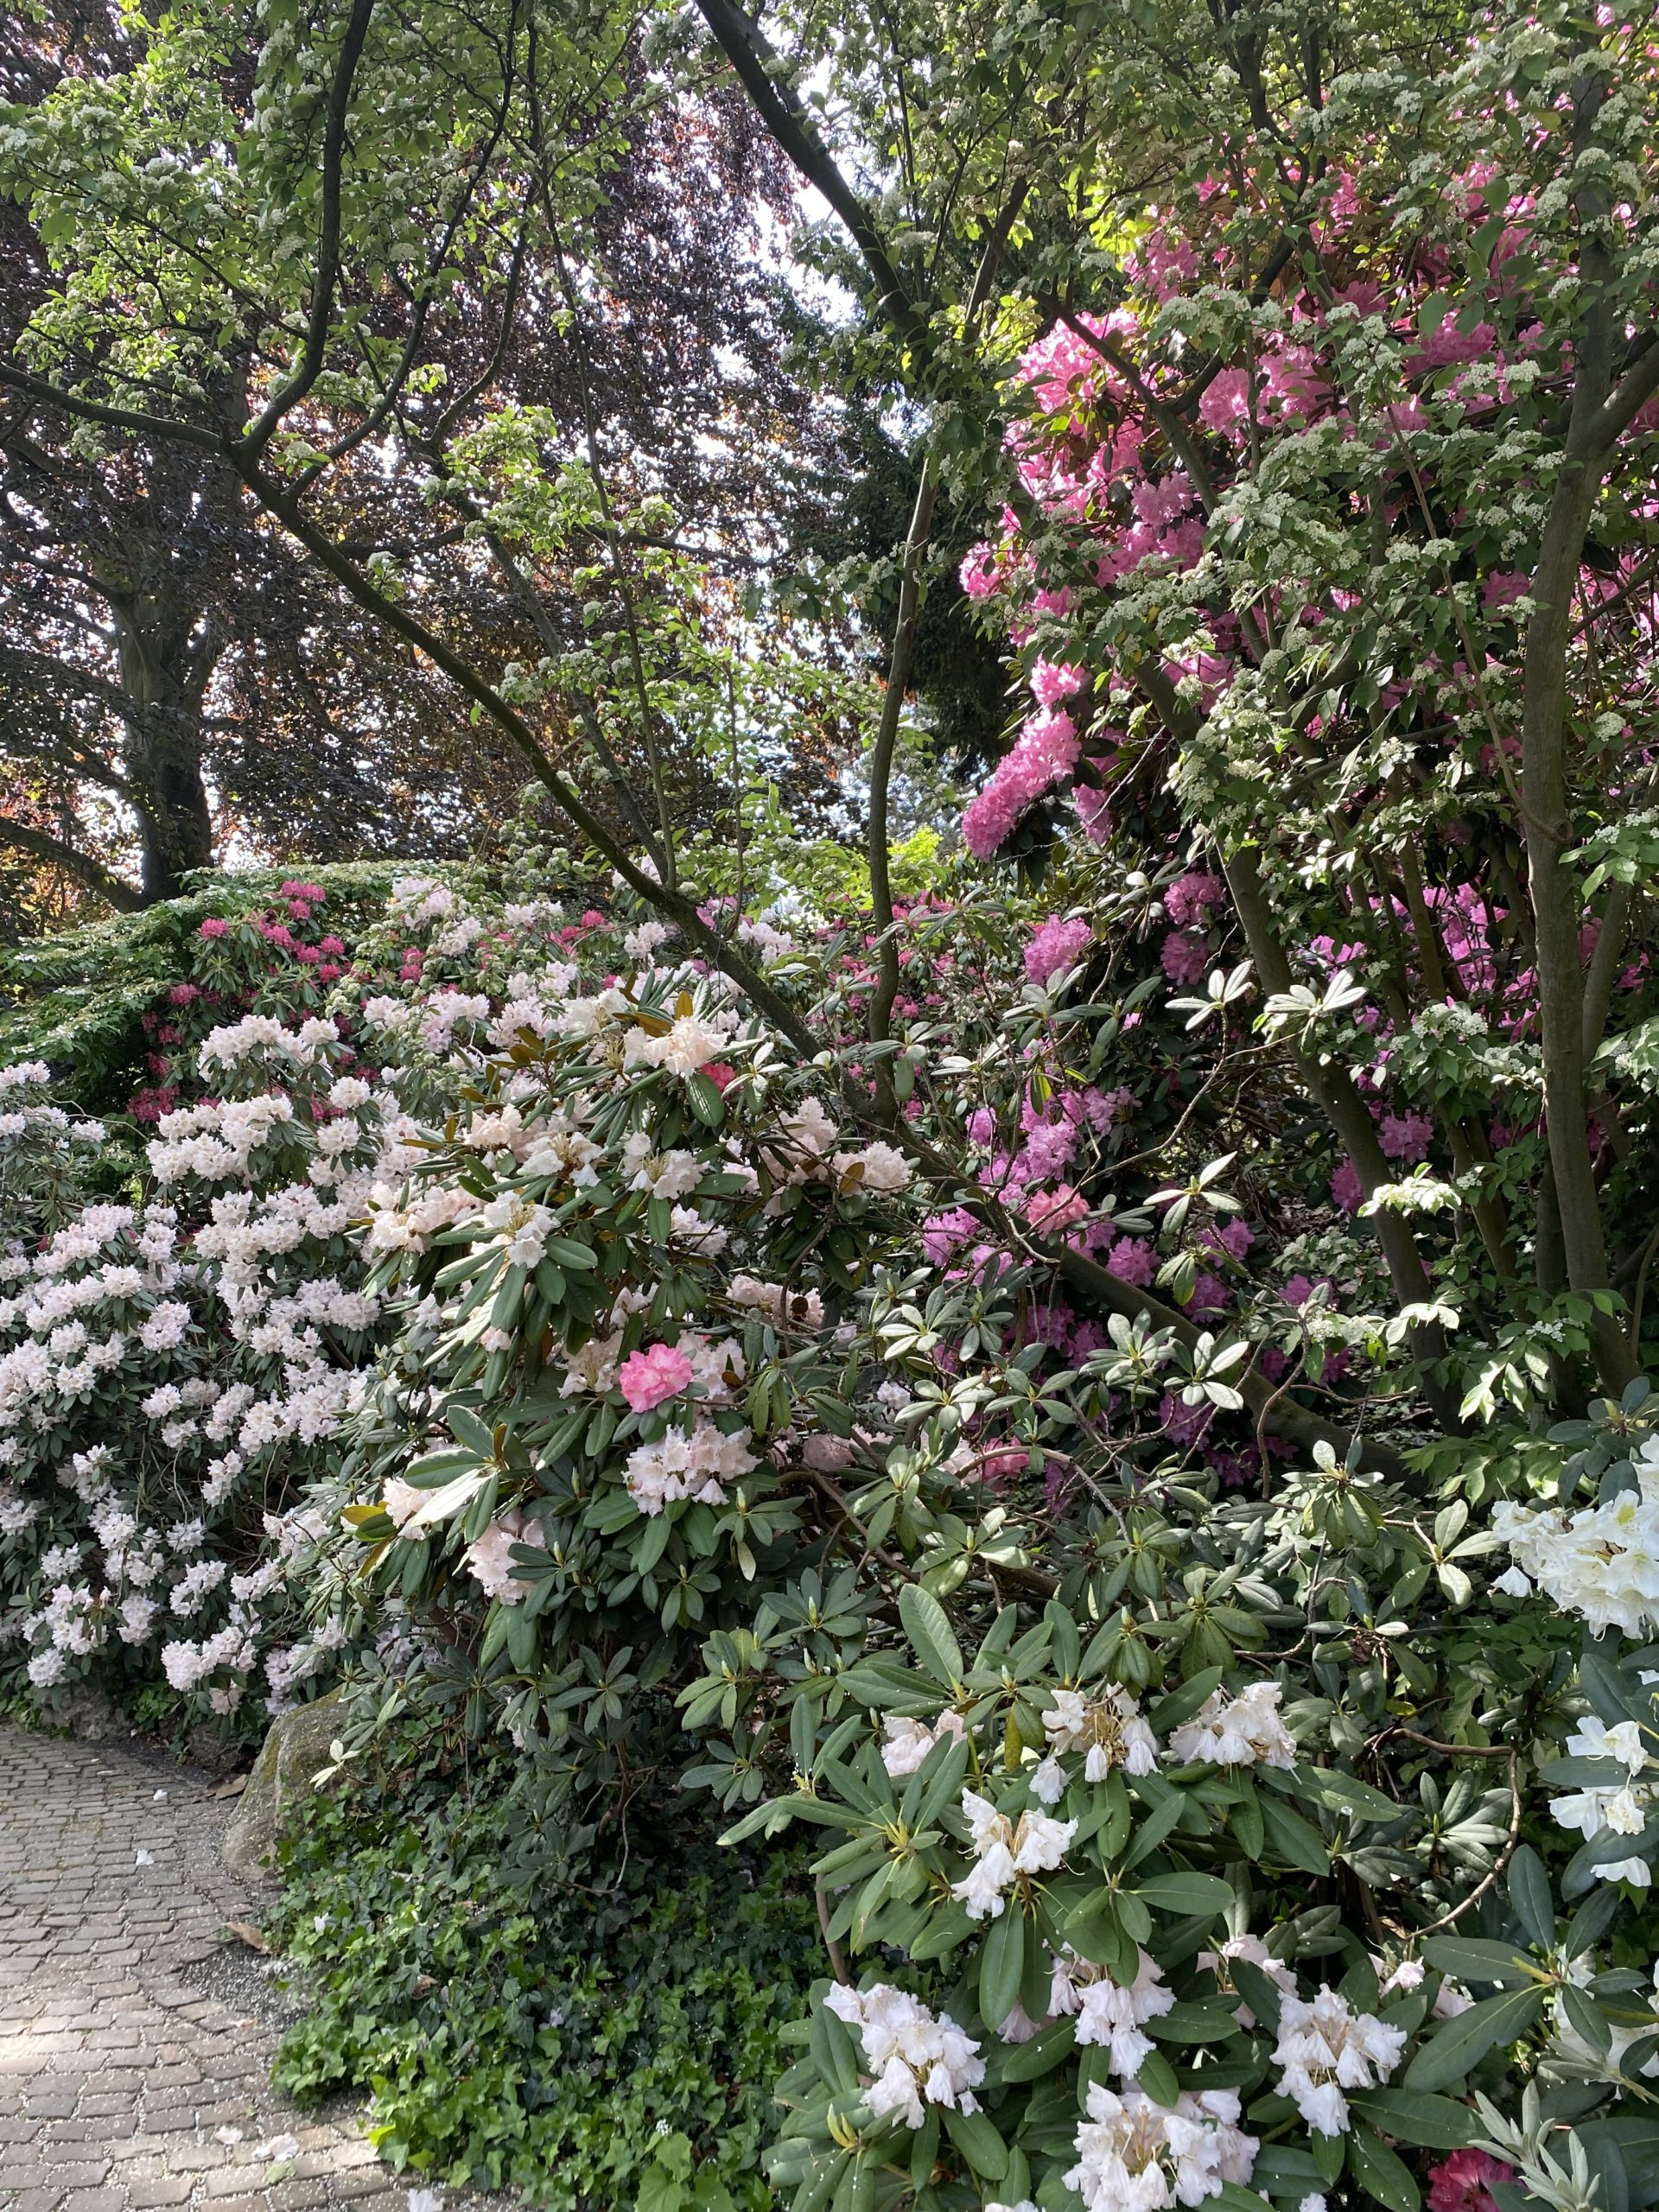 Pinkish flowers insed the garden of Palmengarten.